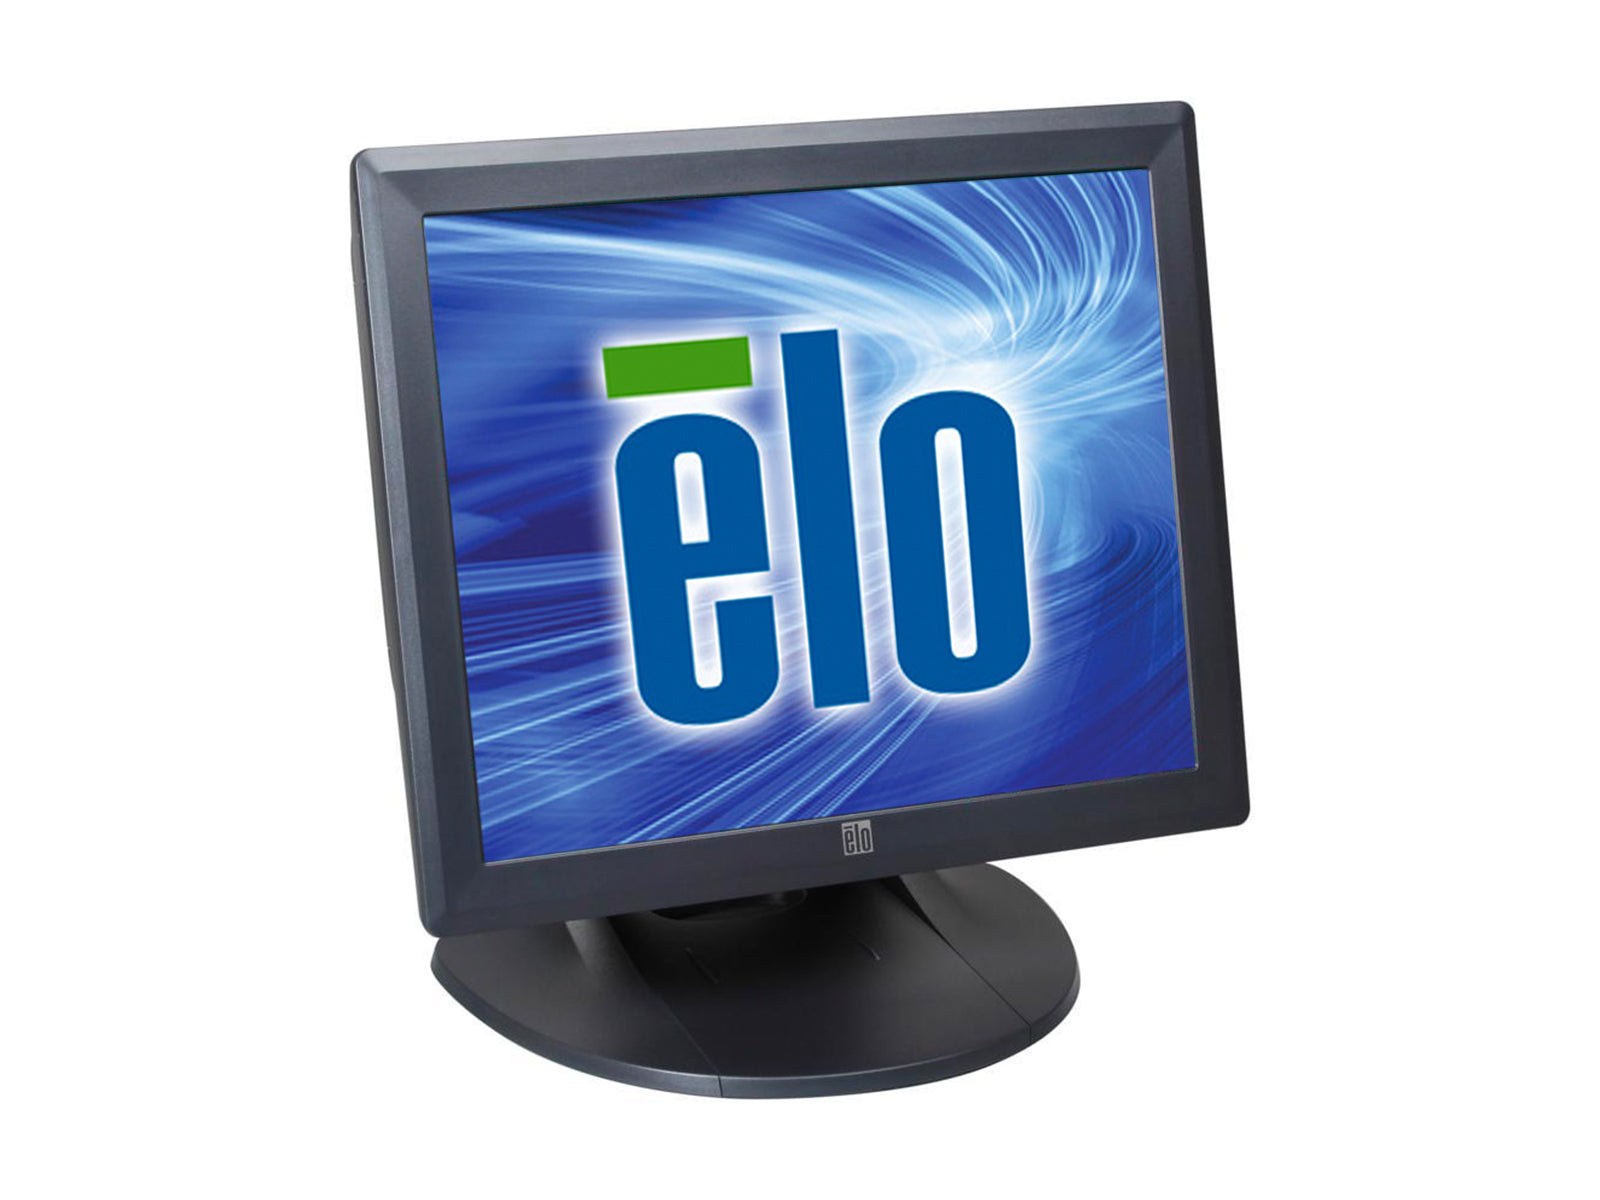 Elo 1729L Touchscreen 17" 1280 x 1024  LED Monitor (E261247) Monitors.com 